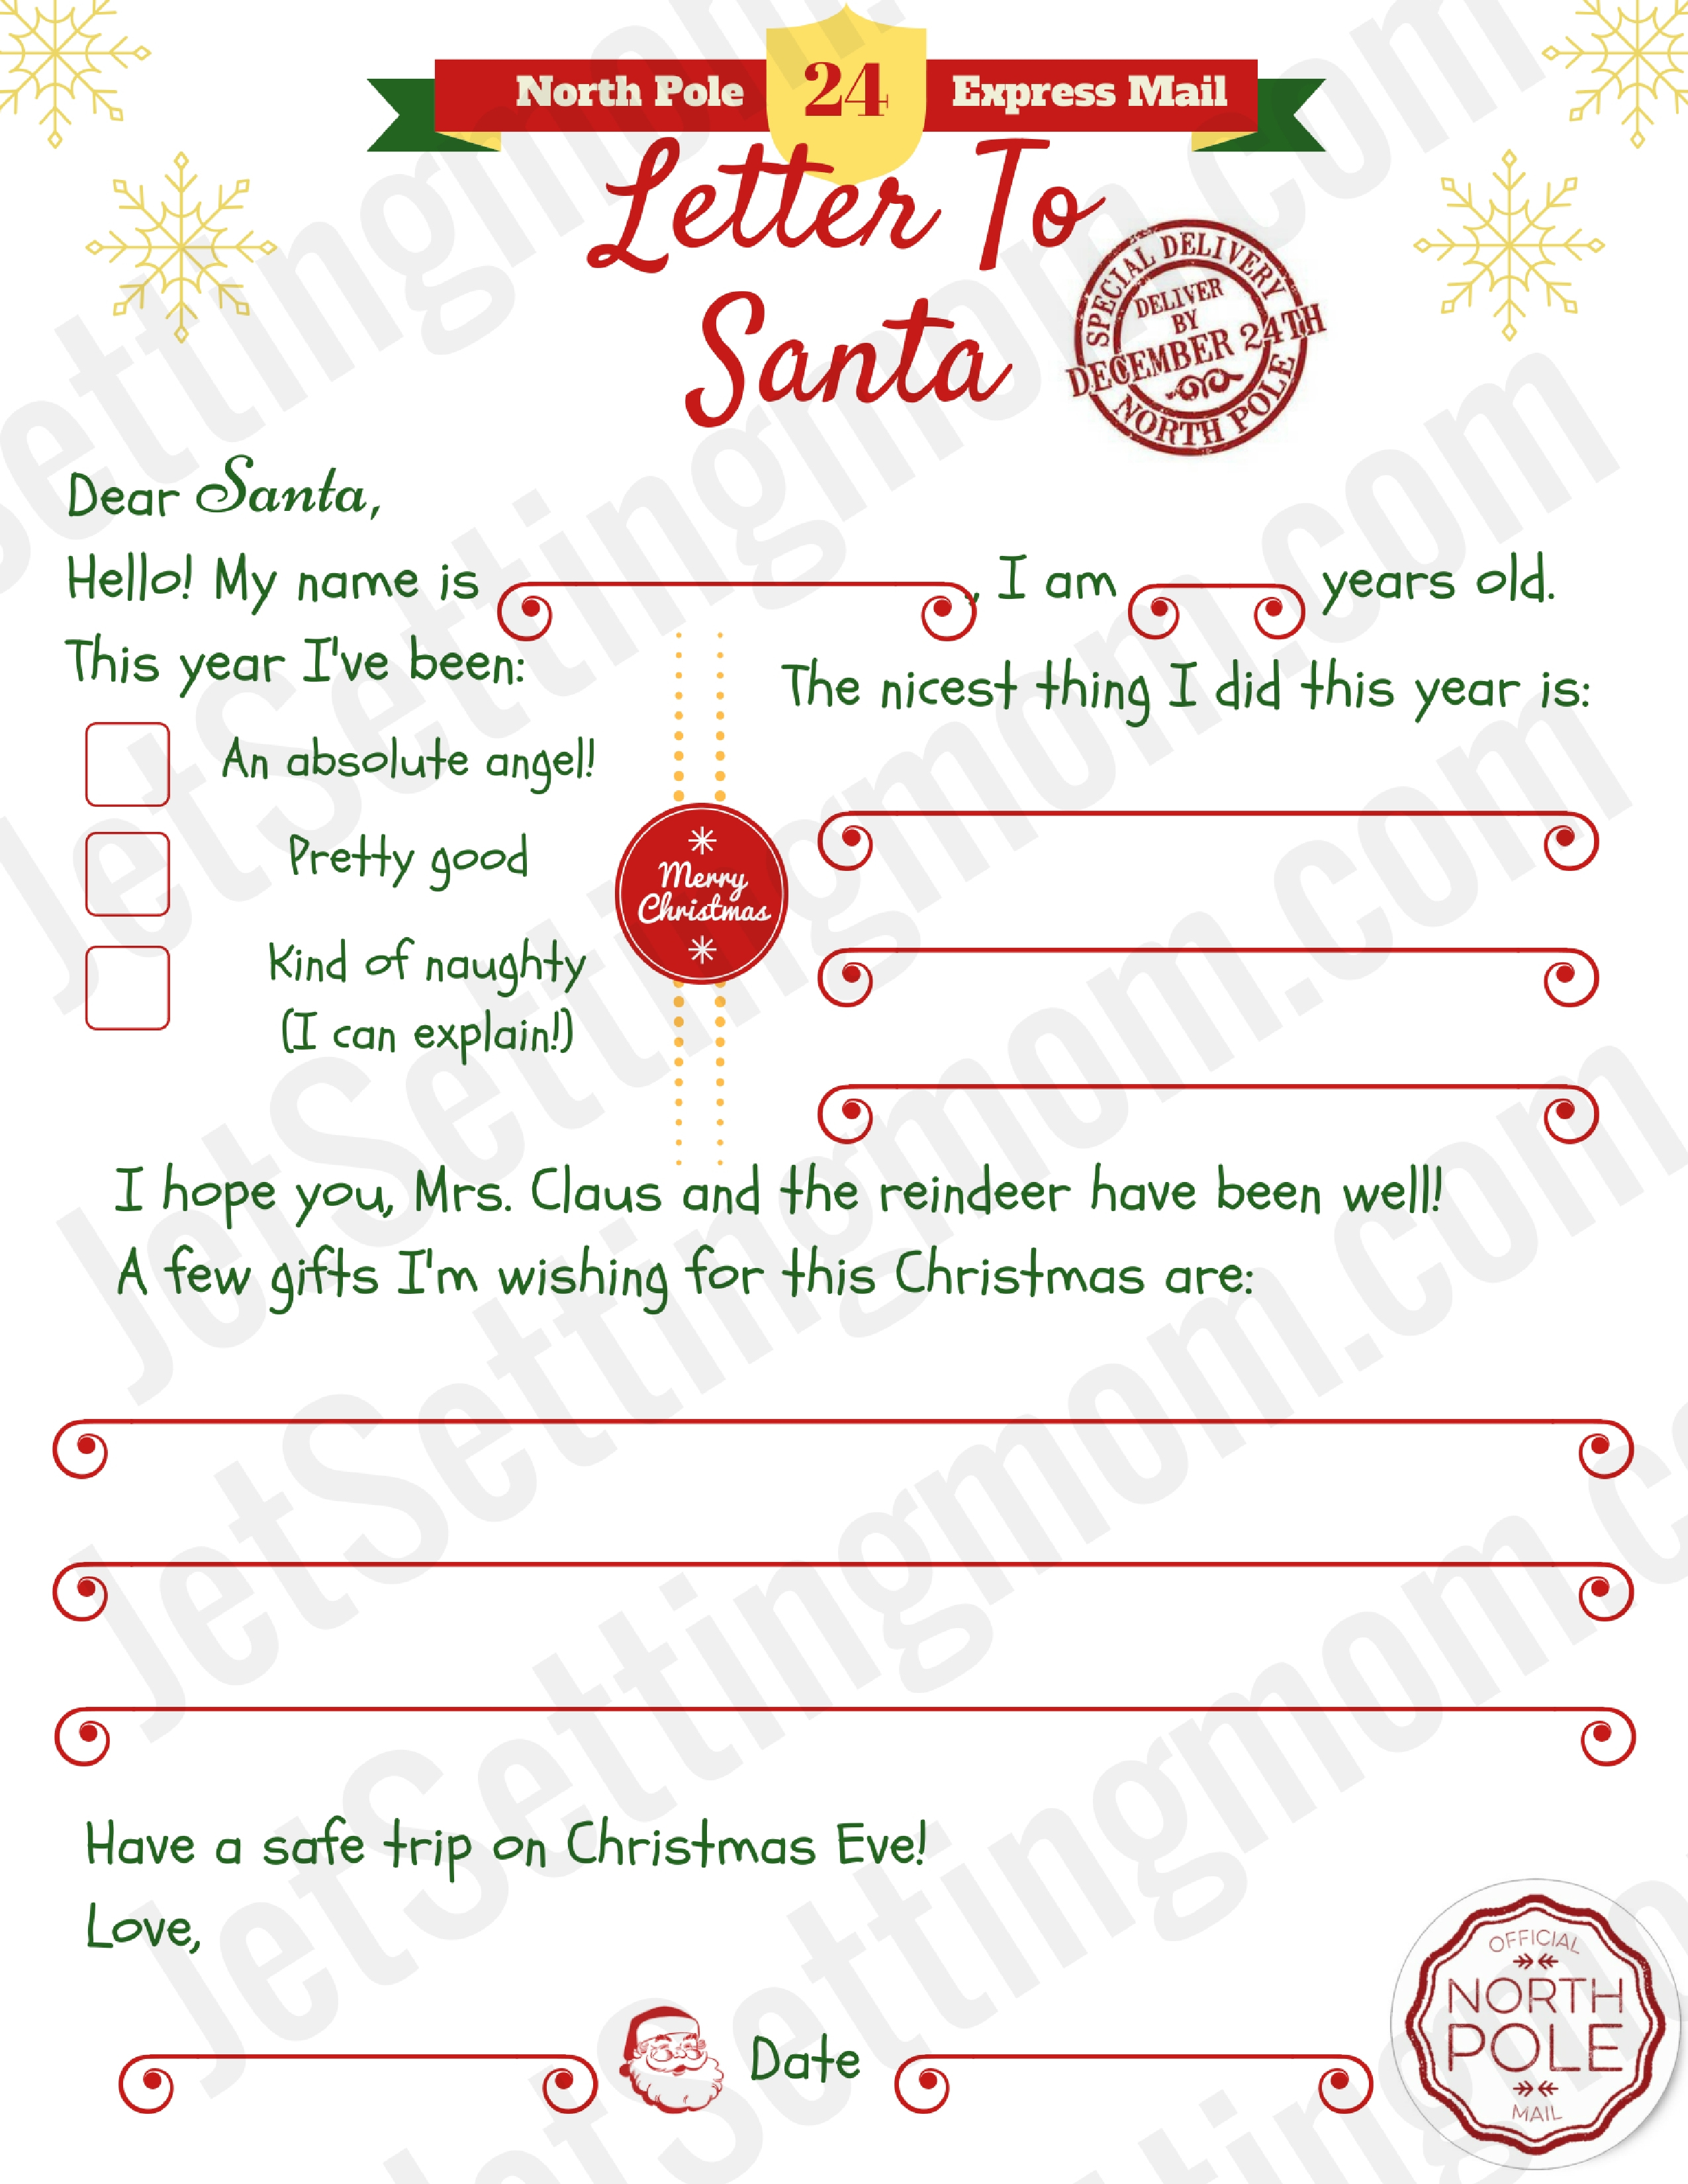 Free Printable Letter To Santa Template - Writing To Santa Made Easy! - Letter To Santa Template Free Printable